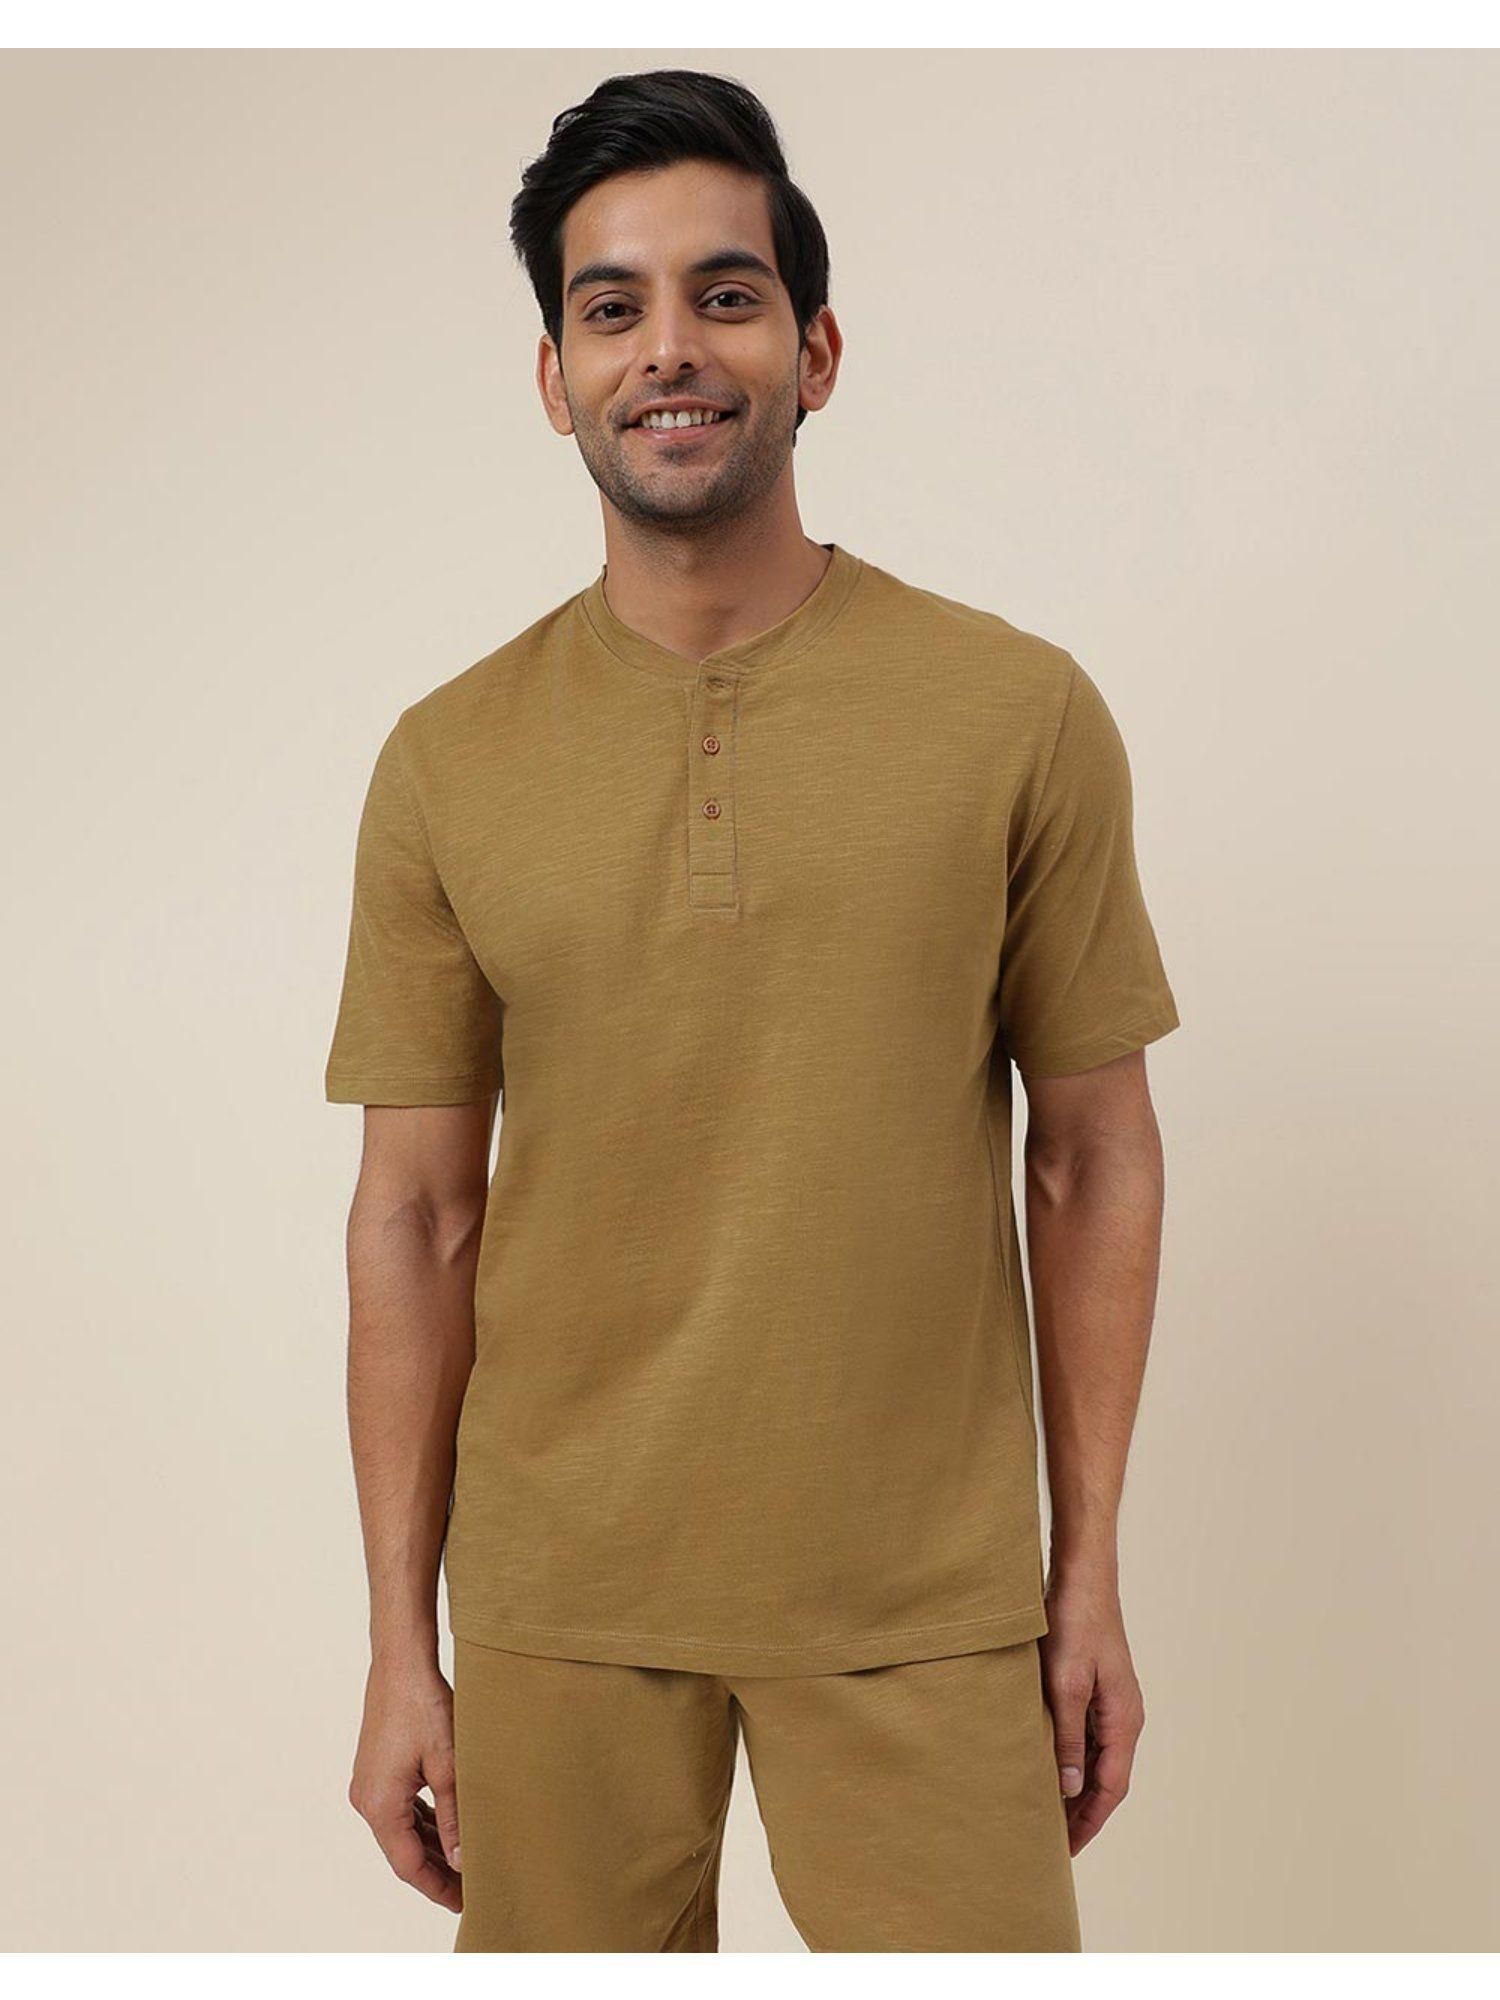 brown-organic-cotton-knit-t-shirt